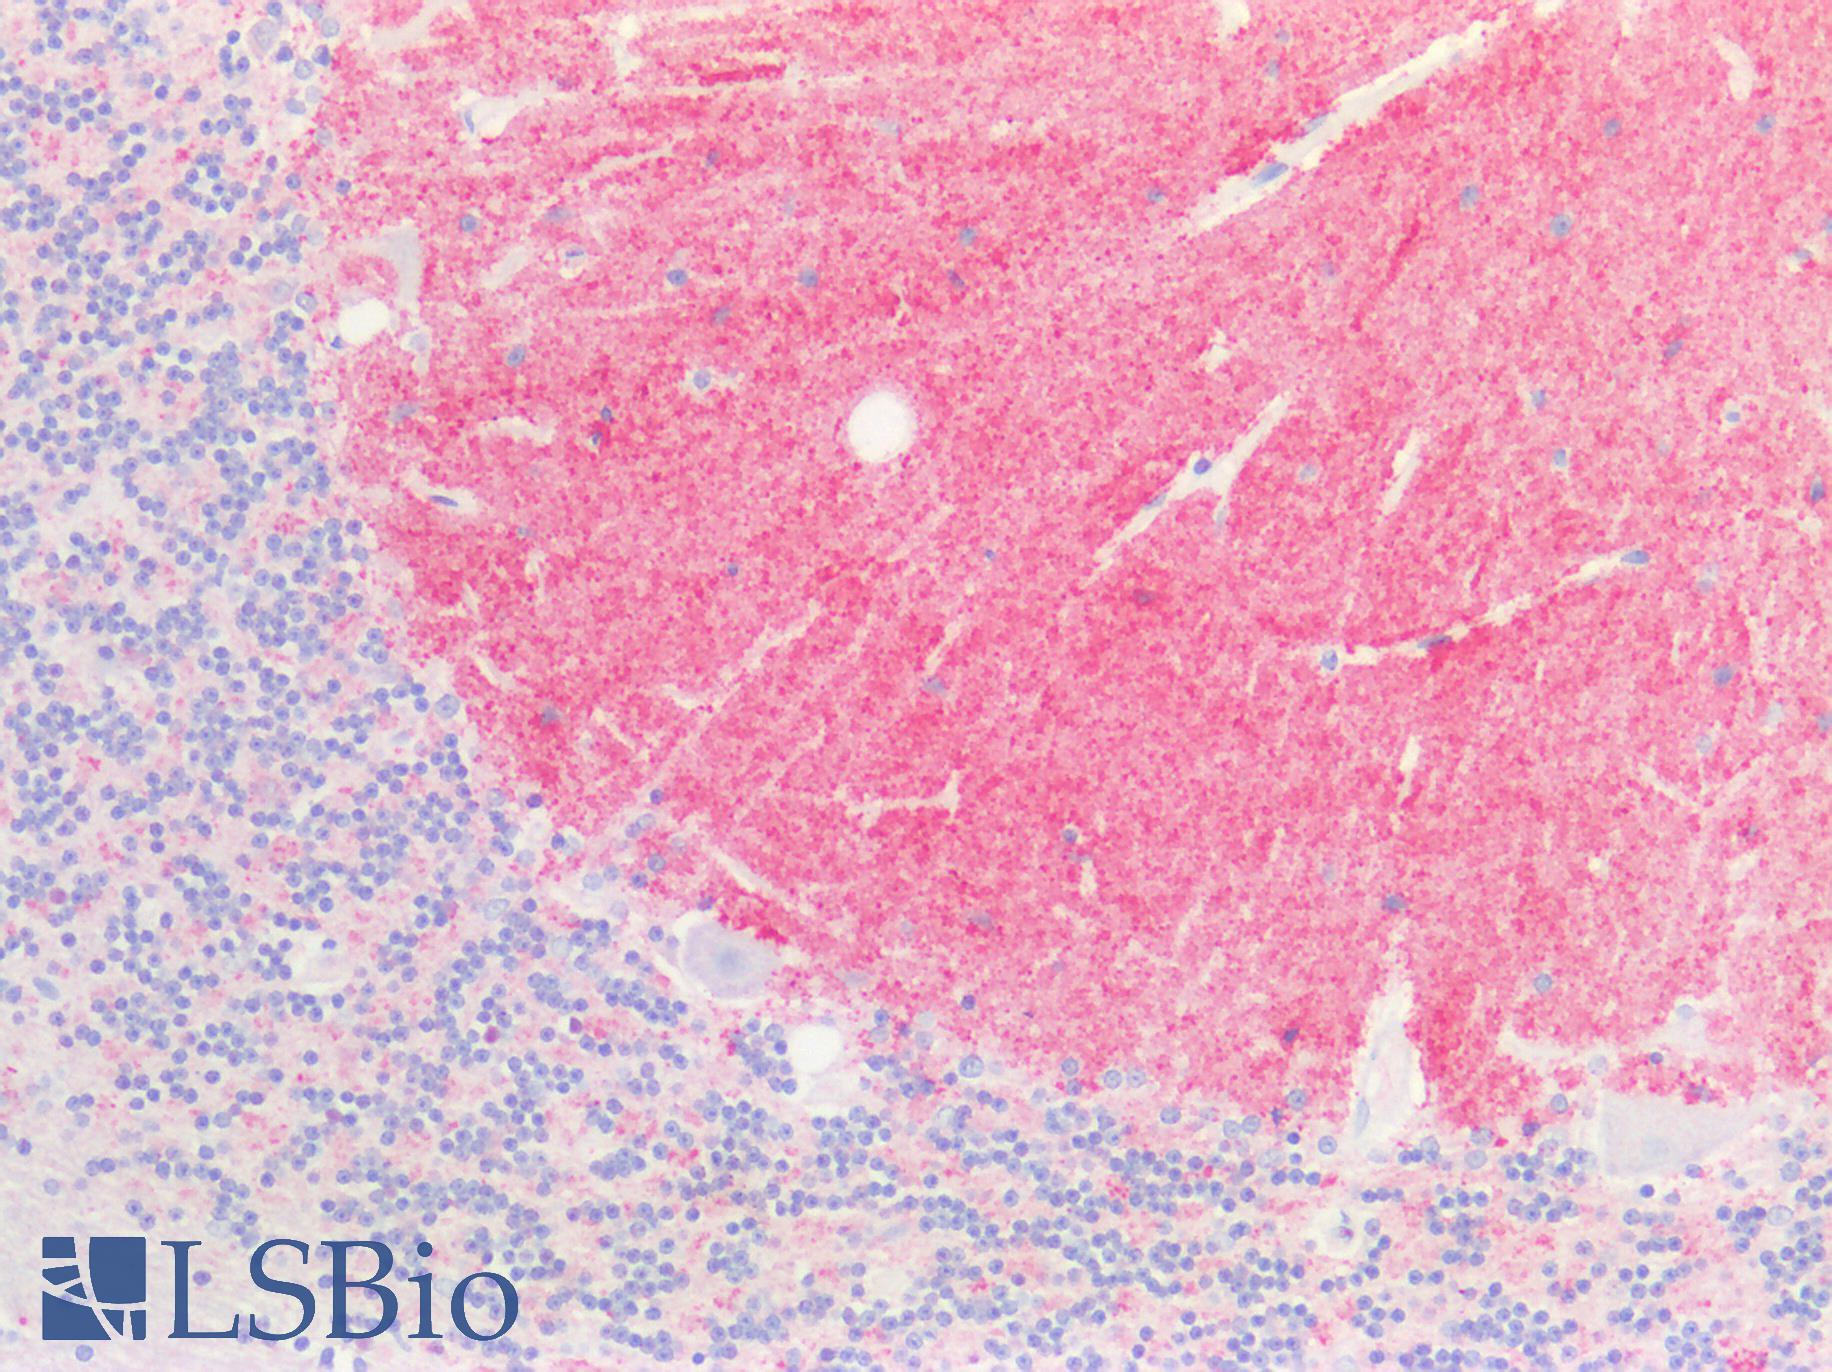 SNCA / Alpha-Synuclein Antibody - Human Brain, Cerebellum: Formalin-Fixed, Paraffin-Embedded (FFPE)